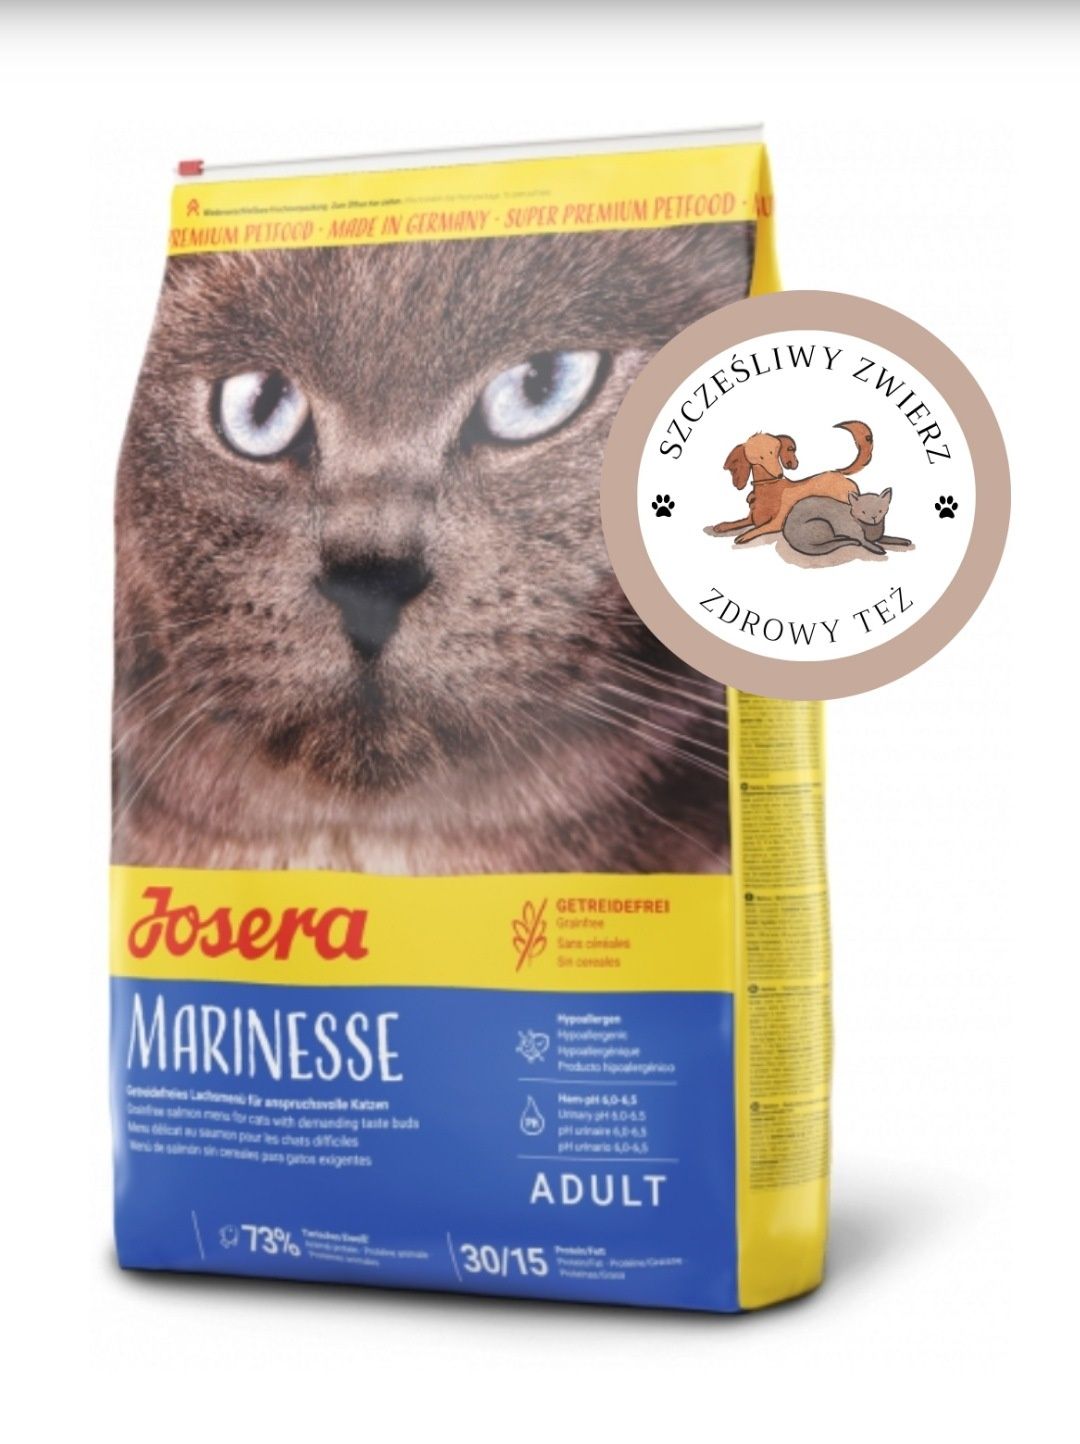 Josera Marinesse karma 2kg dla kota, hipoalergiczna